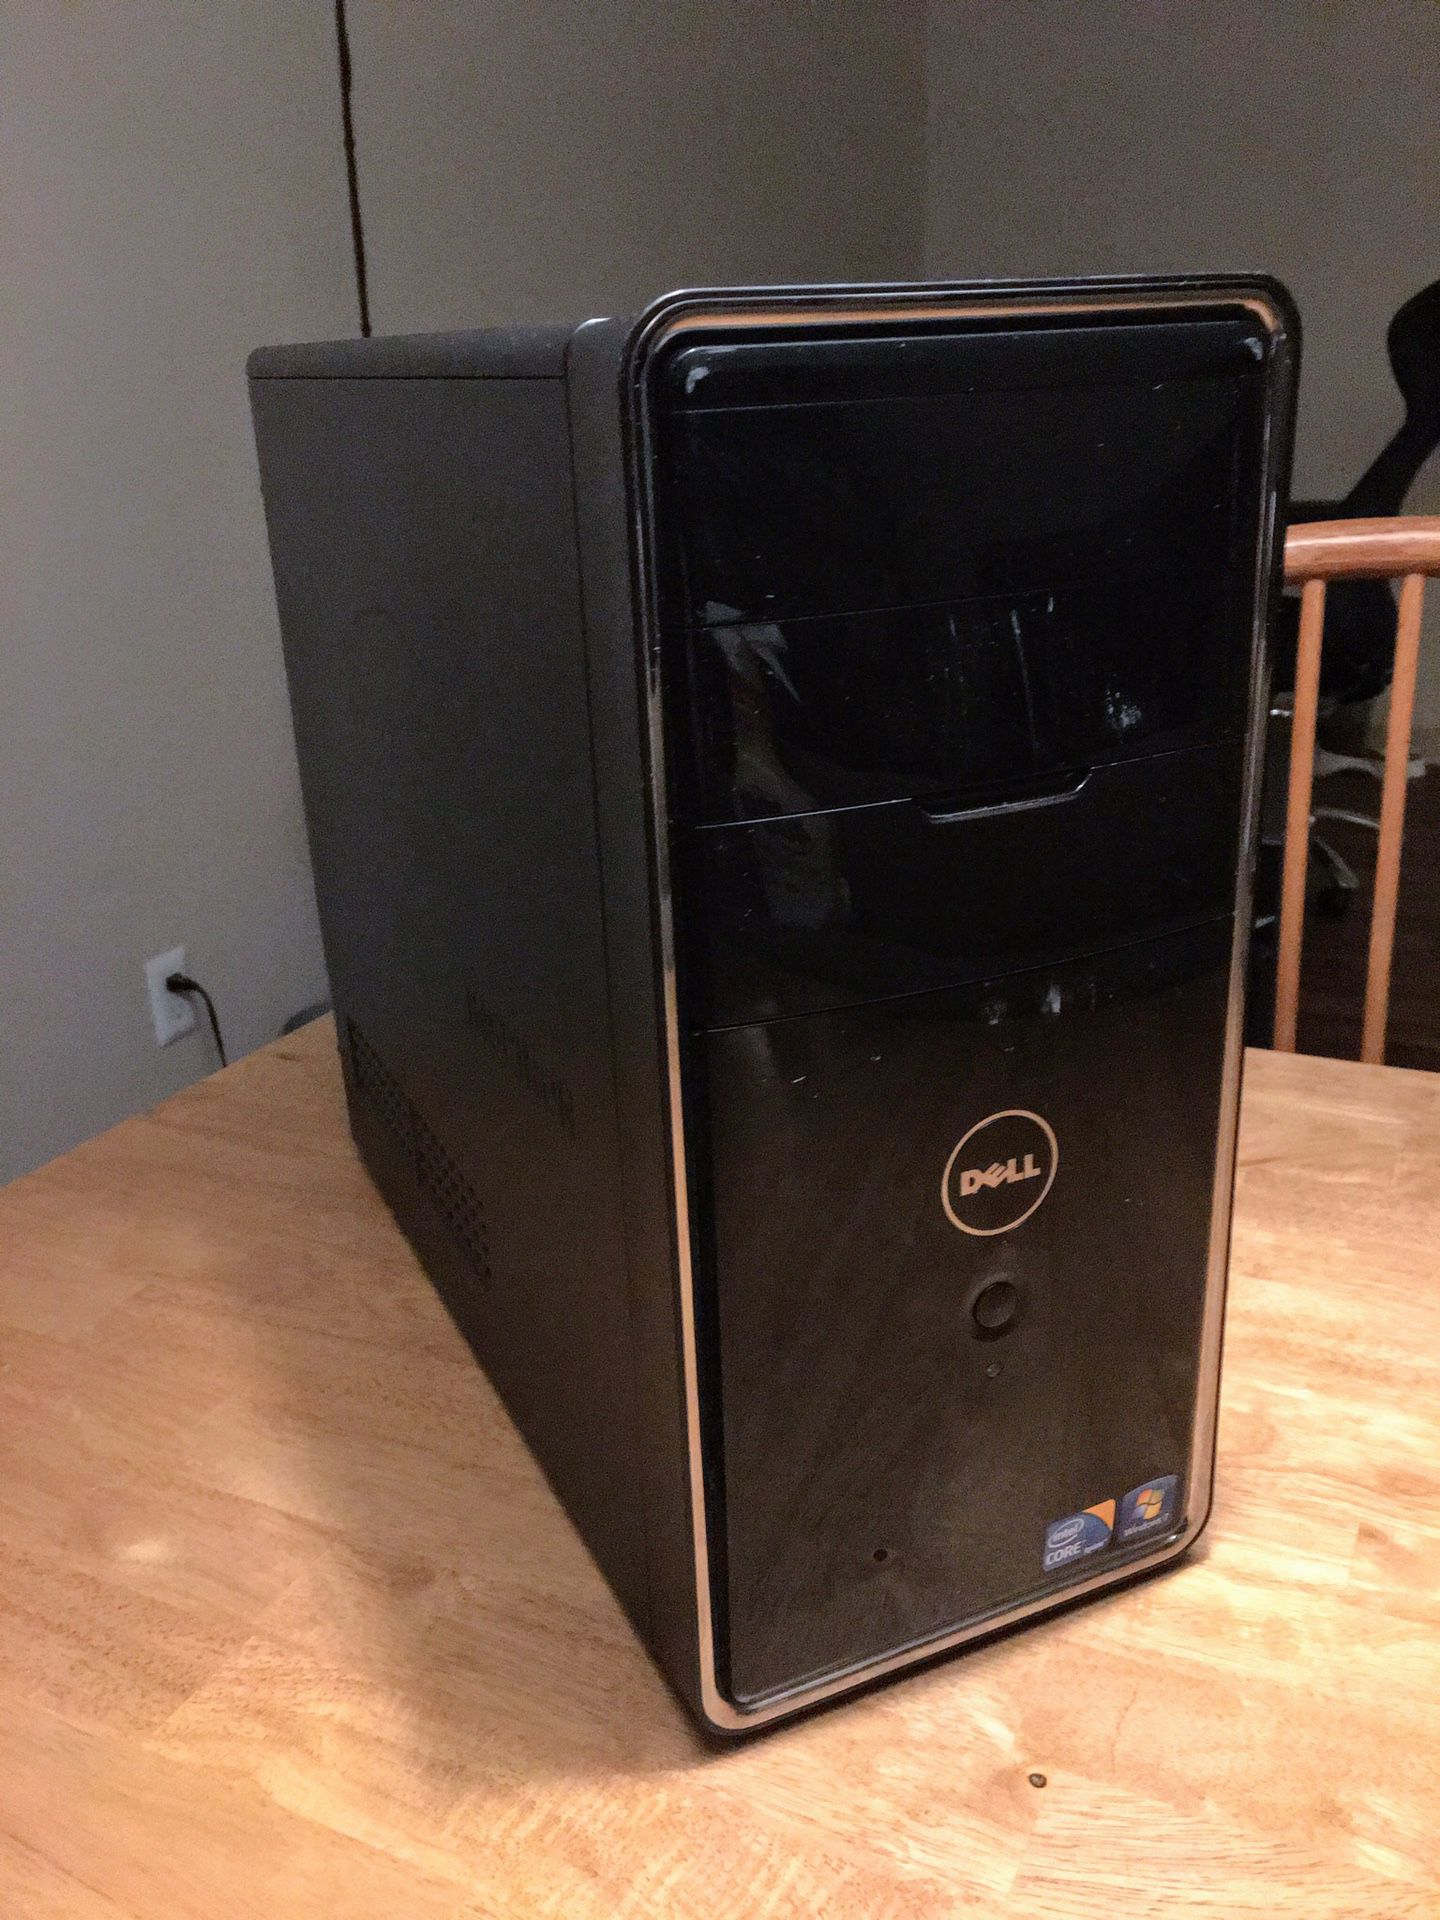 Dell Inspiron 580 Desktop PC